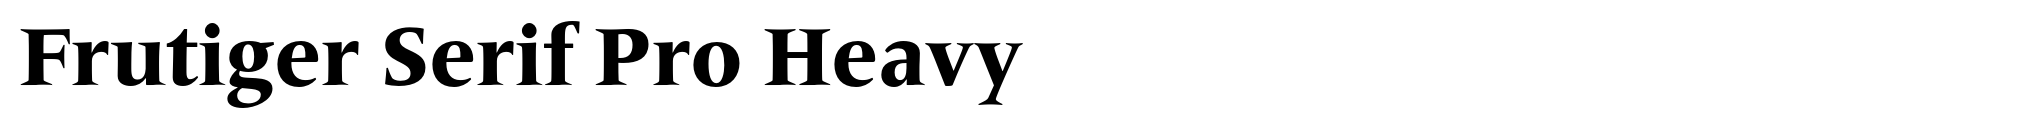 Frutiger Serif Pro Heavy image